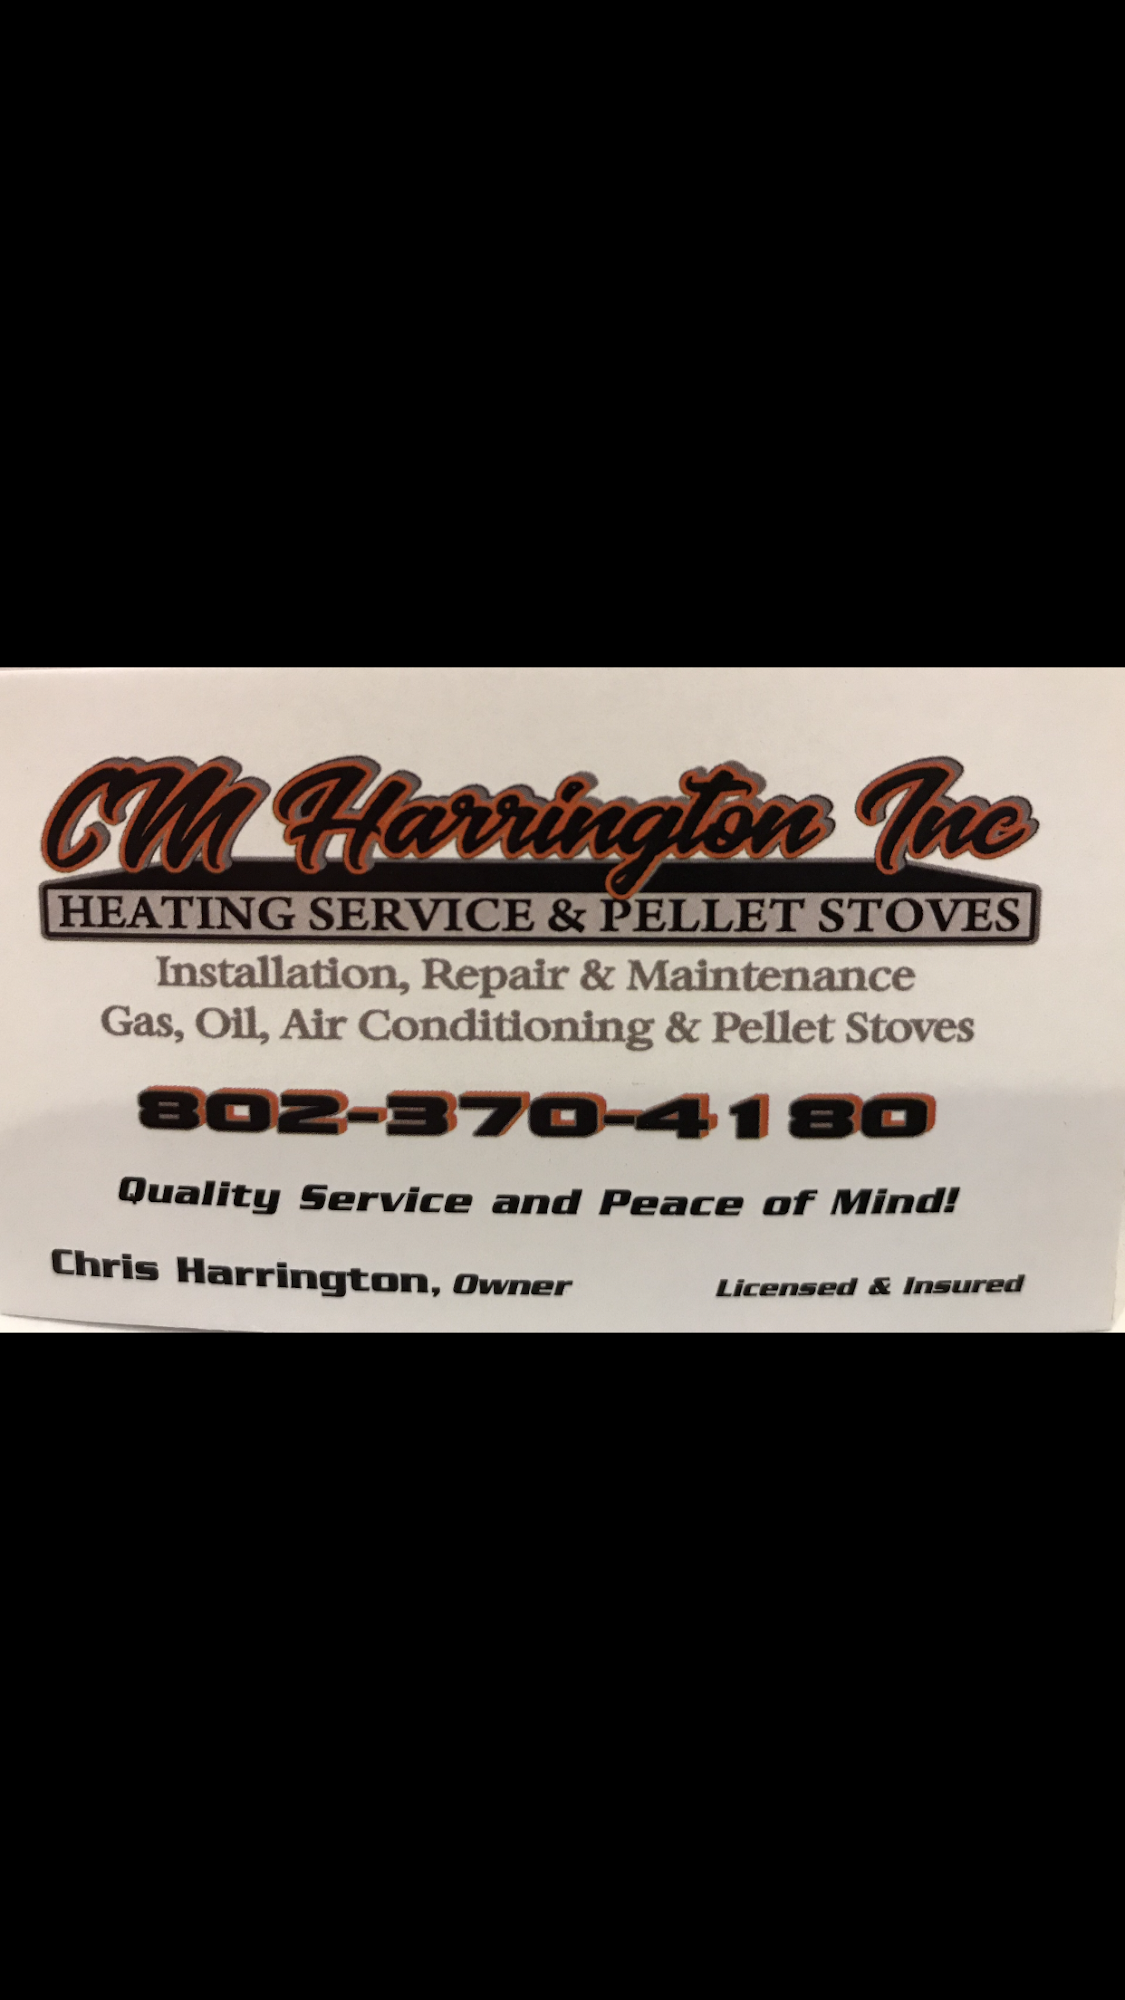 CM Harrington Inc. Heating & Air Conditioning Service & Pellet Stove Repairs